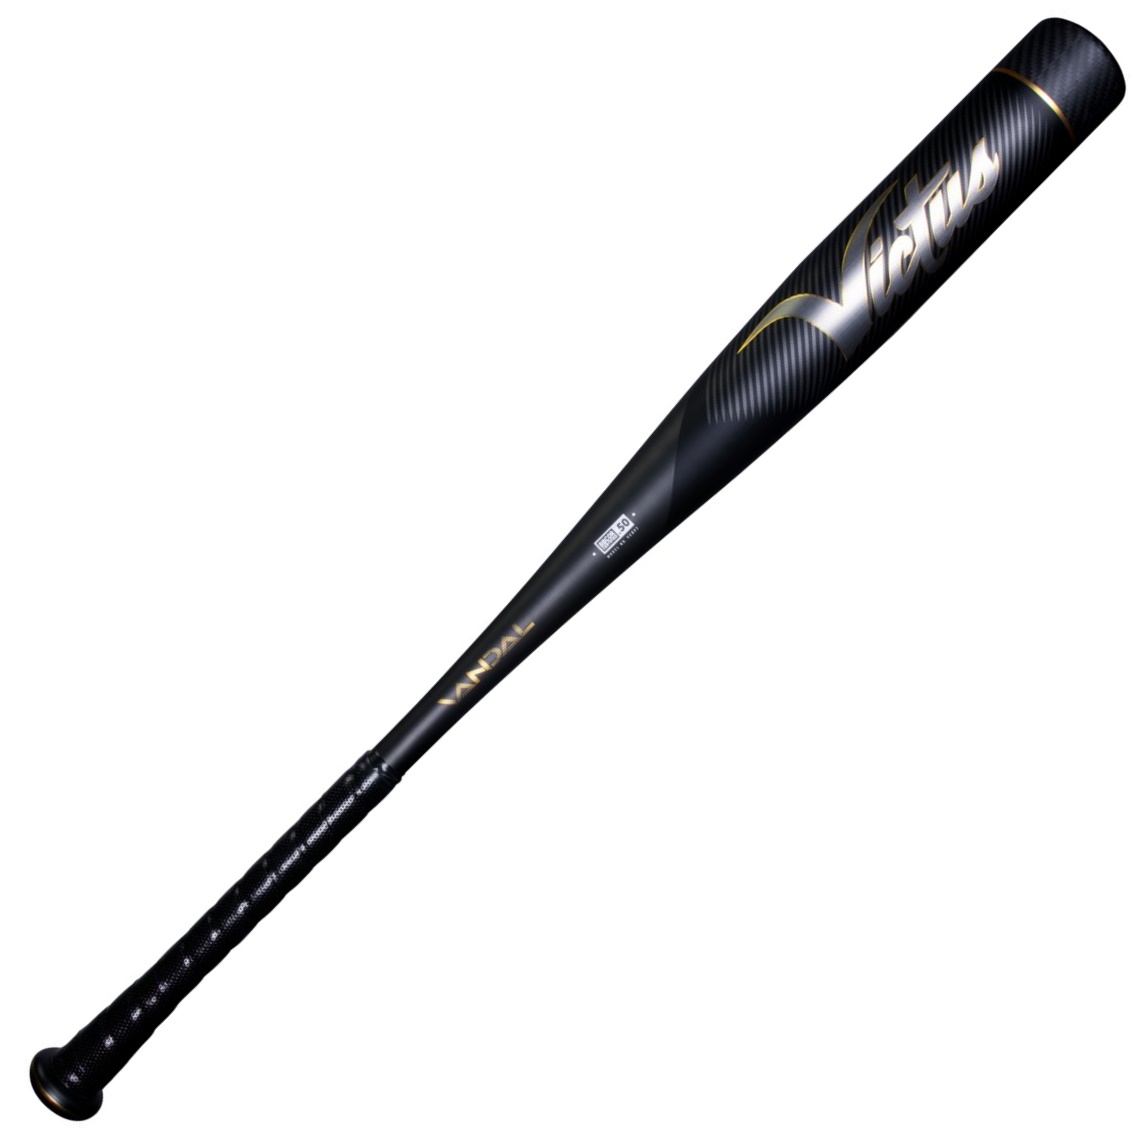 victus-vandal-2-10-baseball-bat-28-inch-18-oz VSBV2X10-2818 Victus   Ringless barrel design made of multi-variable wall thickness for a